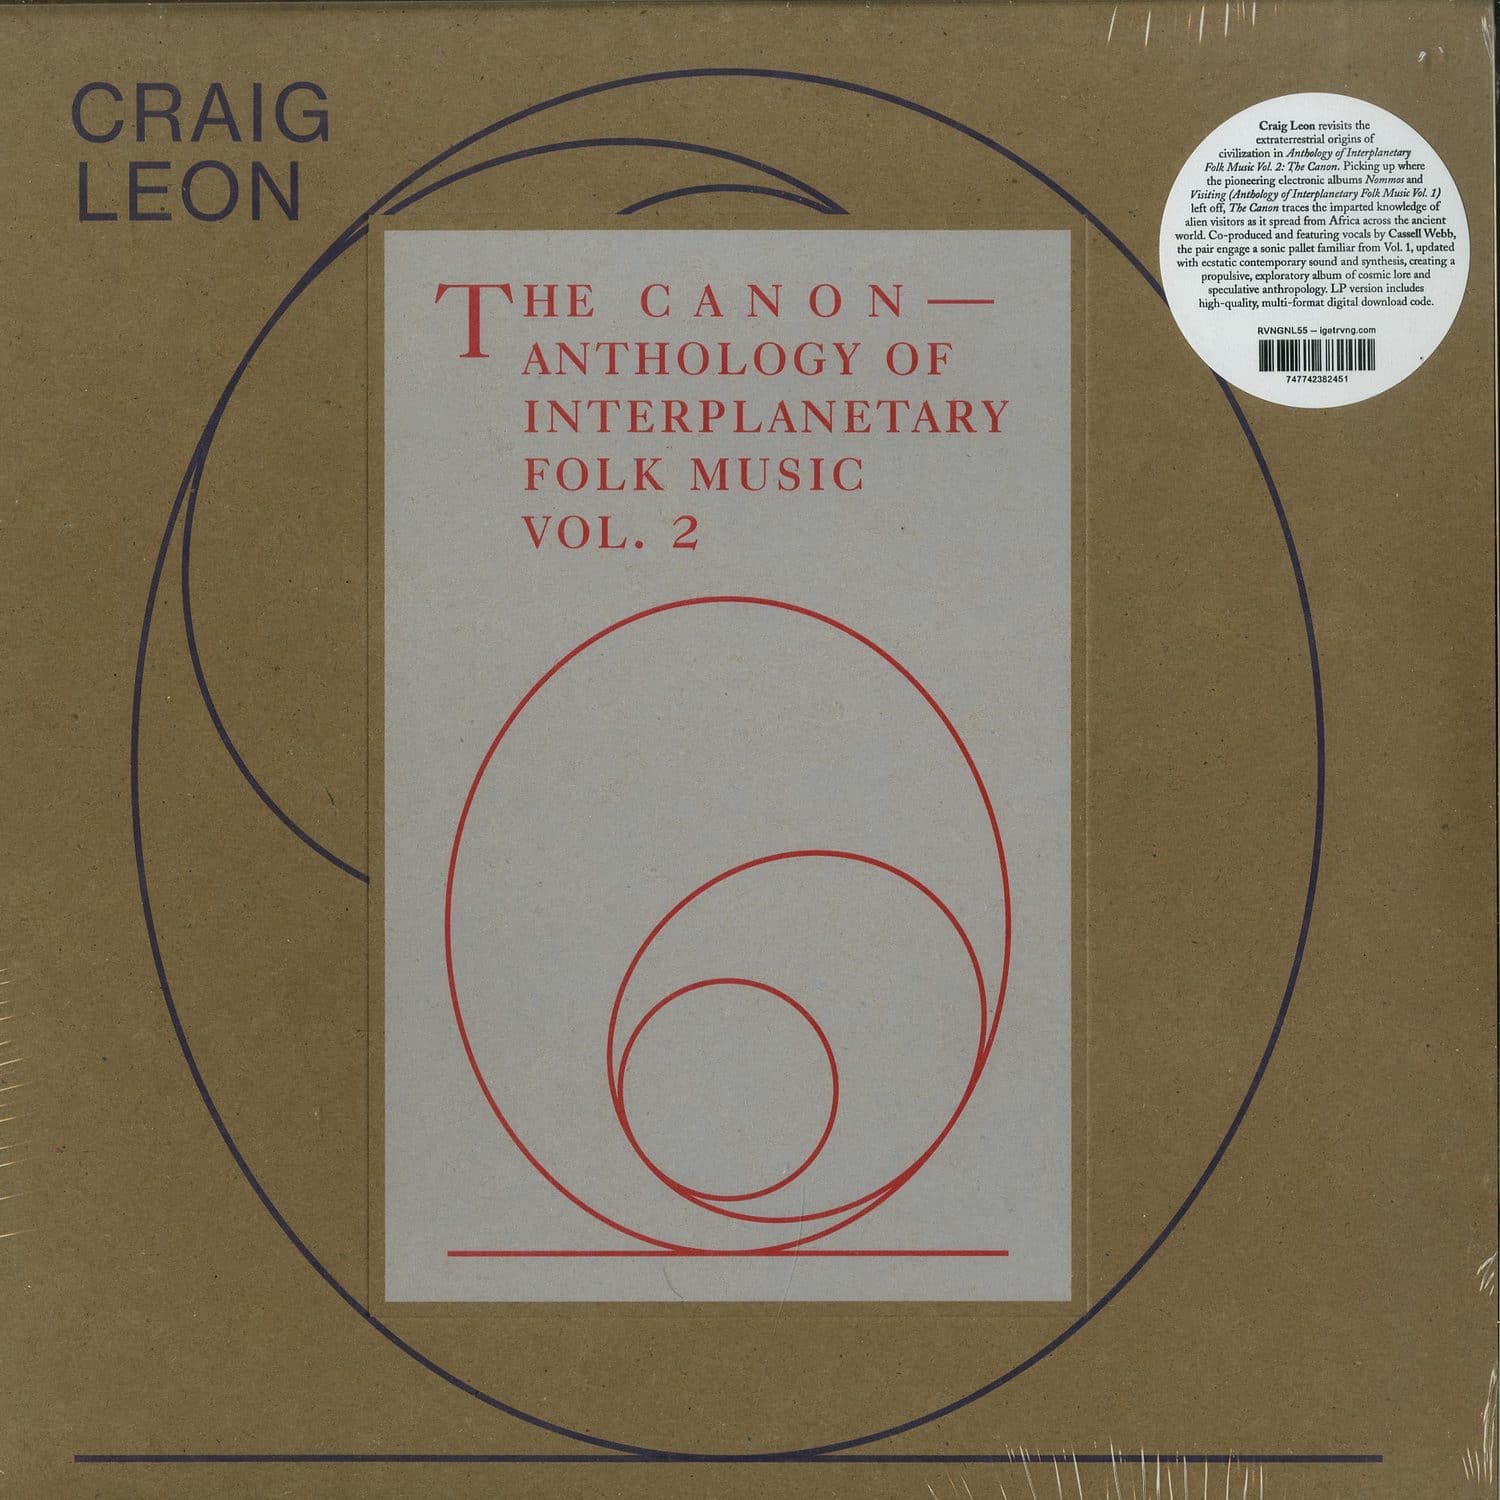 Craig Leon - ANTHOLOGY OF INTERPLANETARY FOLK MUSIC VOL.2: THE 